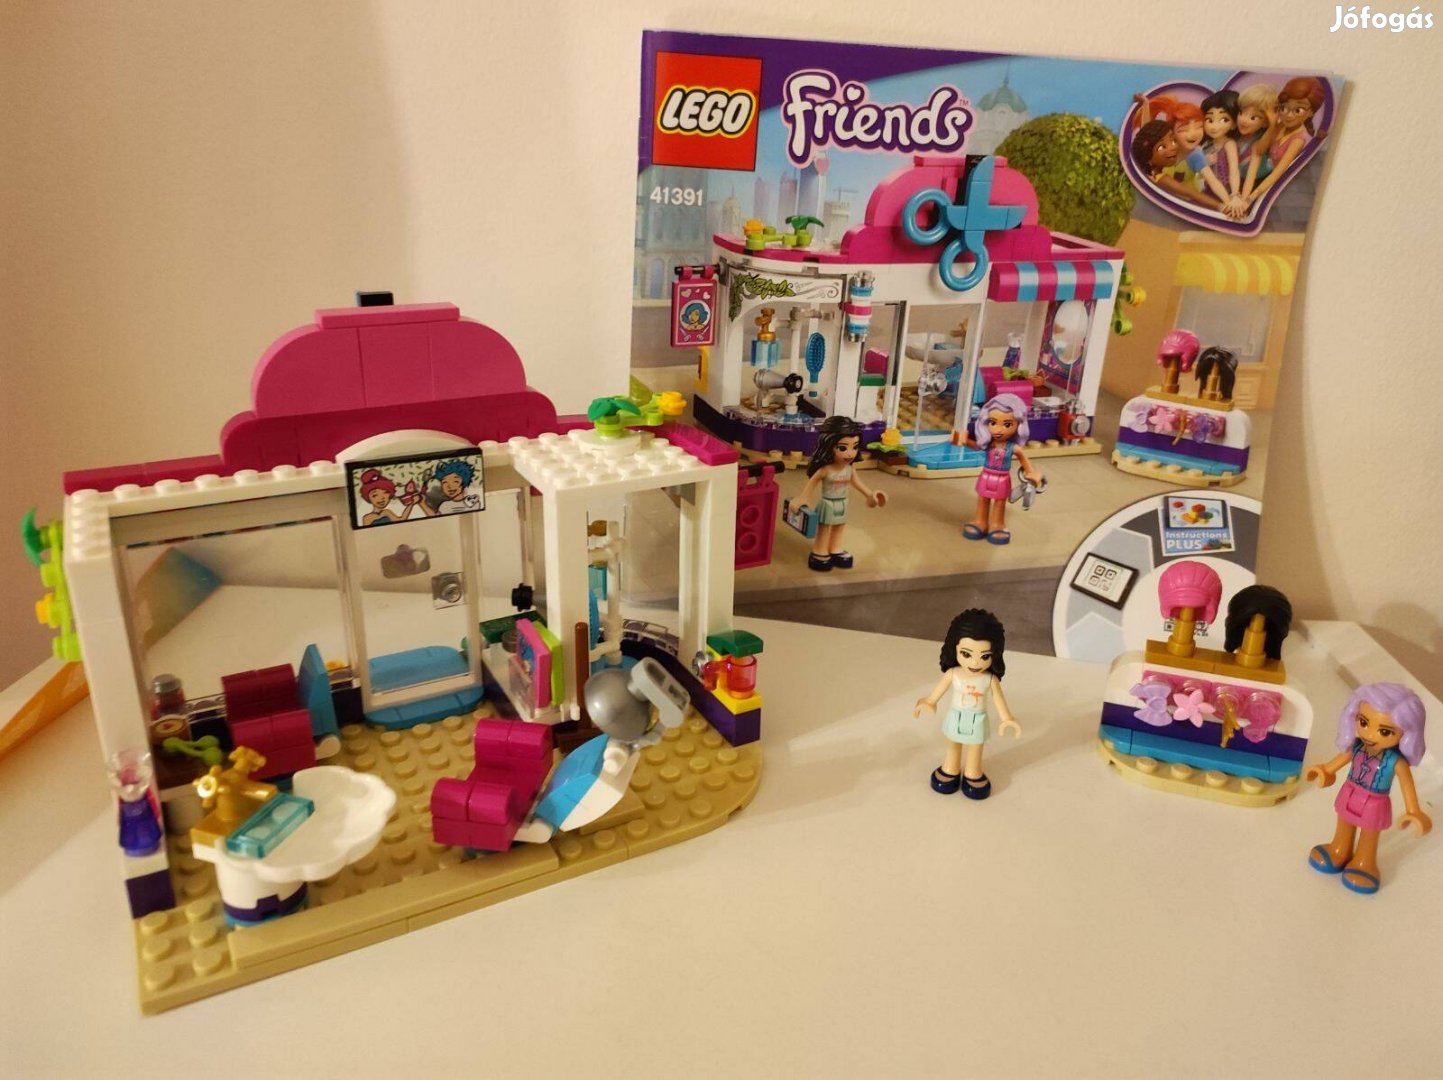 Lego Friends fodrászat -41391